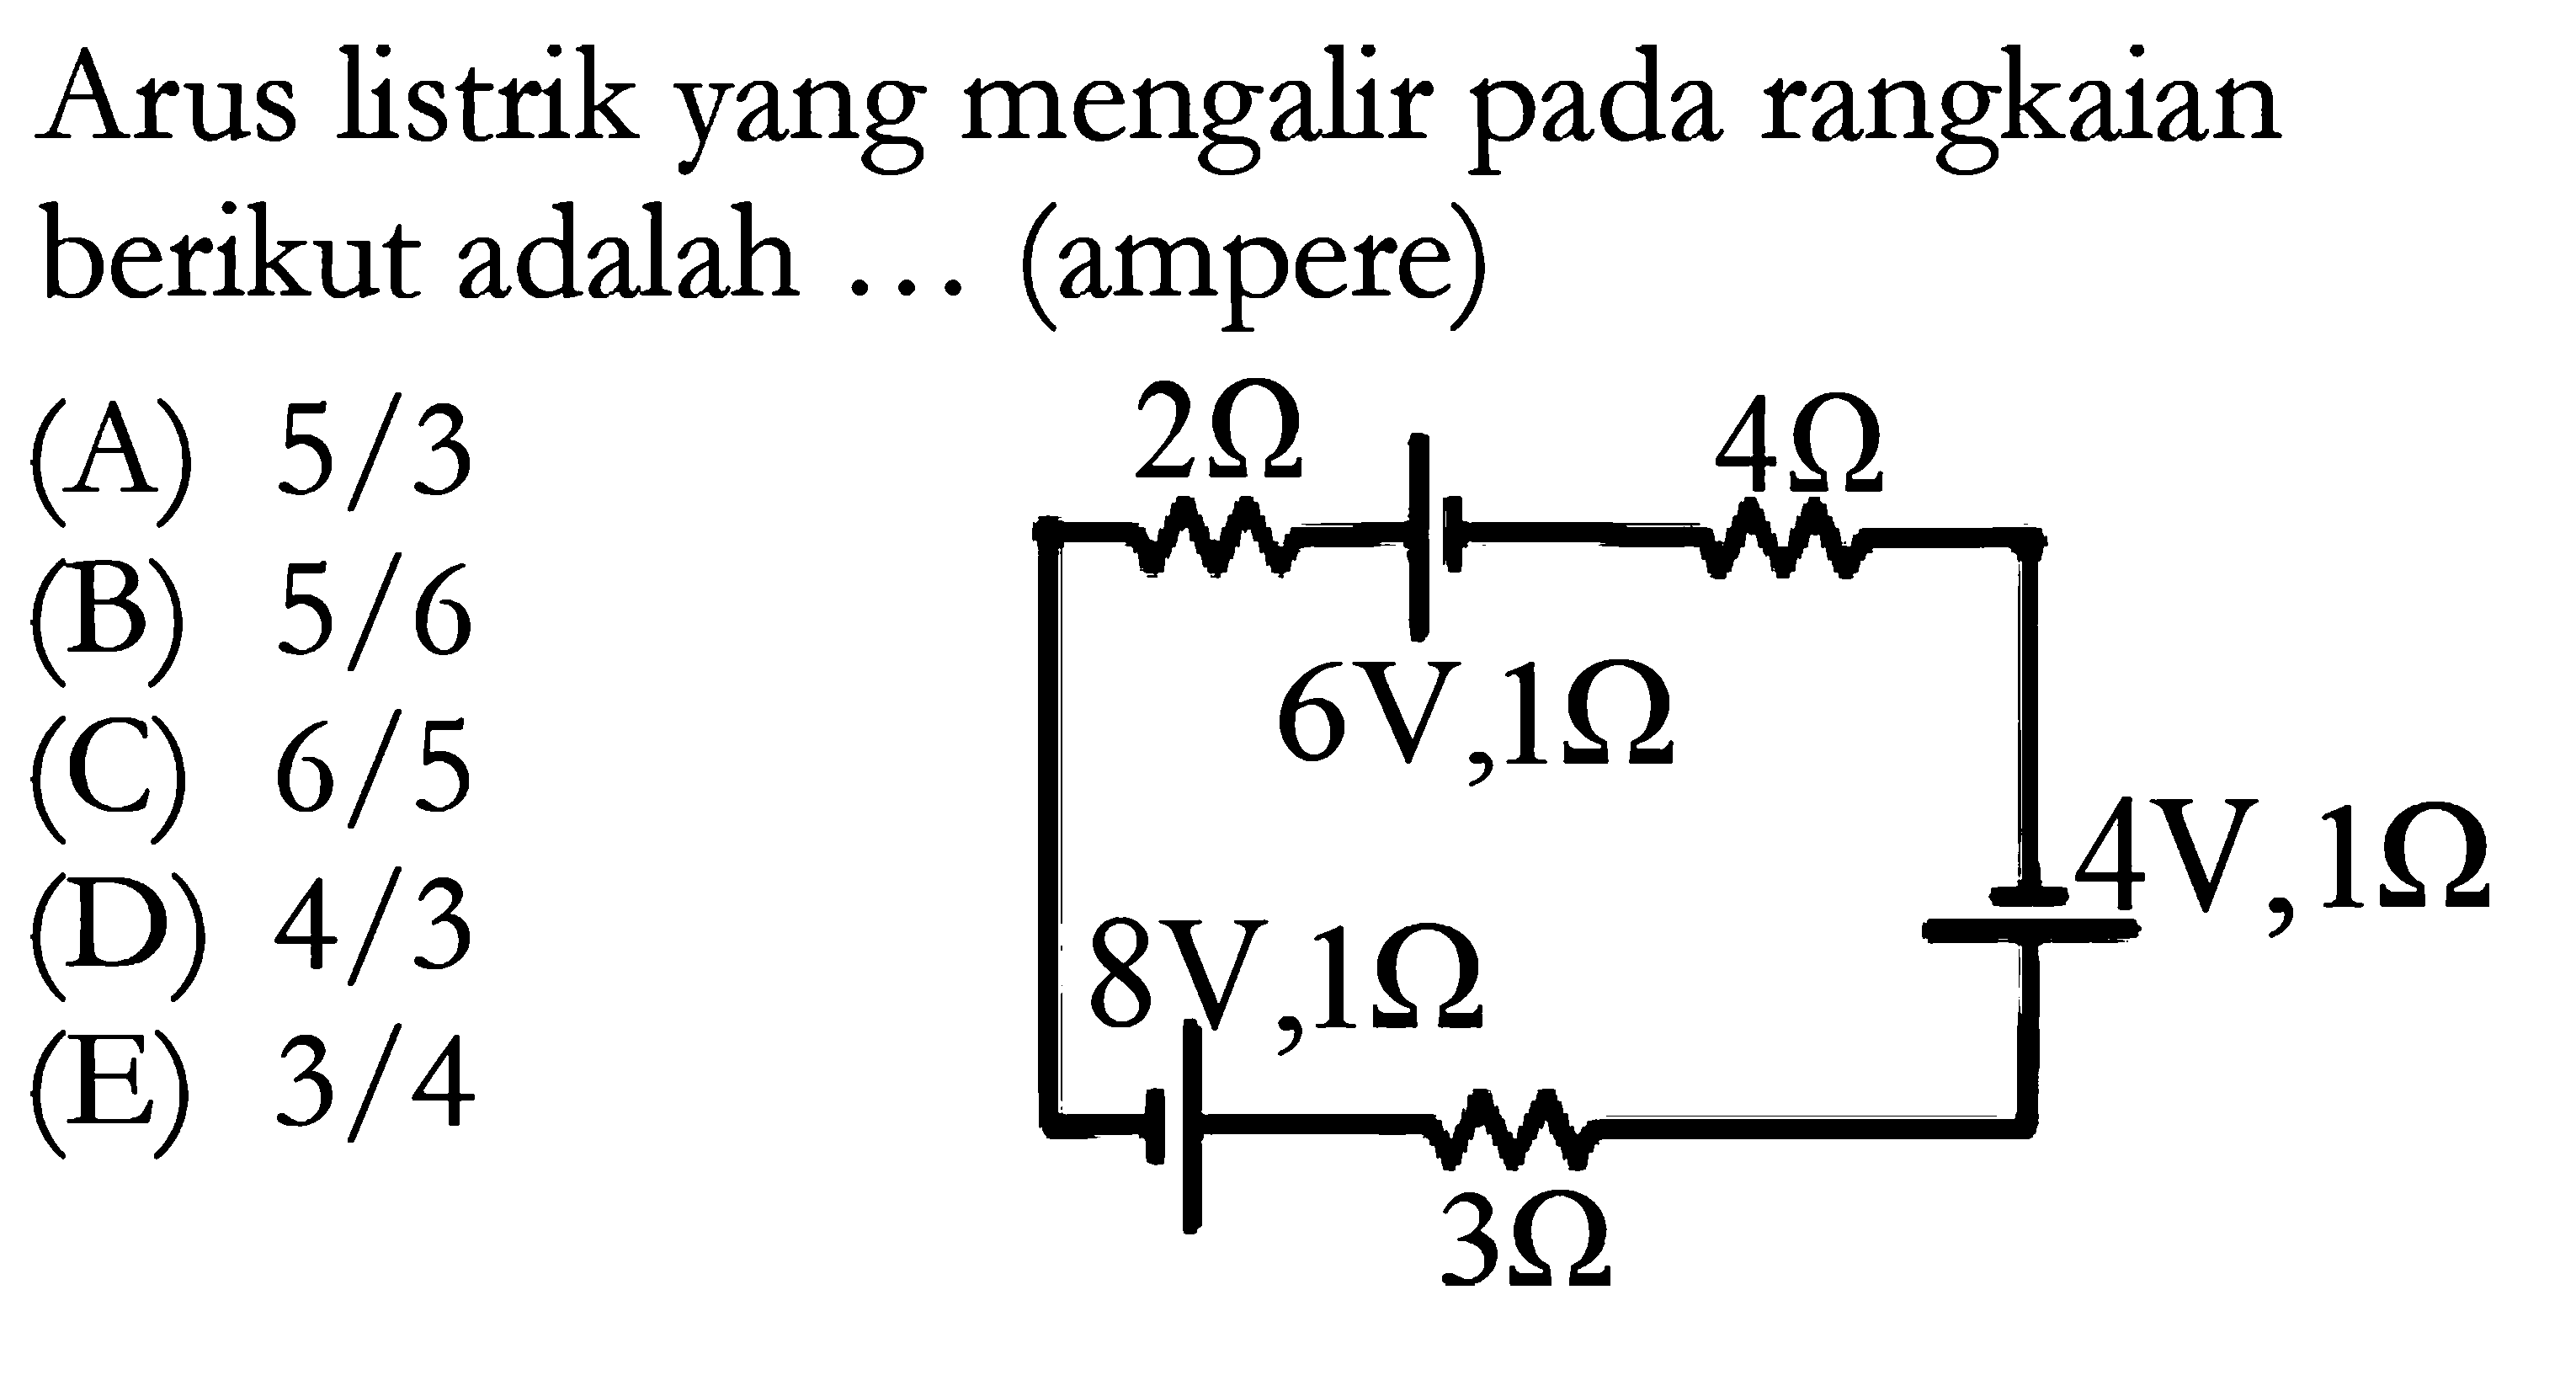 Arus listrik yang mengalir pada rangkaian berikut adalah ... (ampere)2 ohm 4 ohm6 V, 1 ohm4 V, 1 ohm8 V, 1 ohm3 ohm